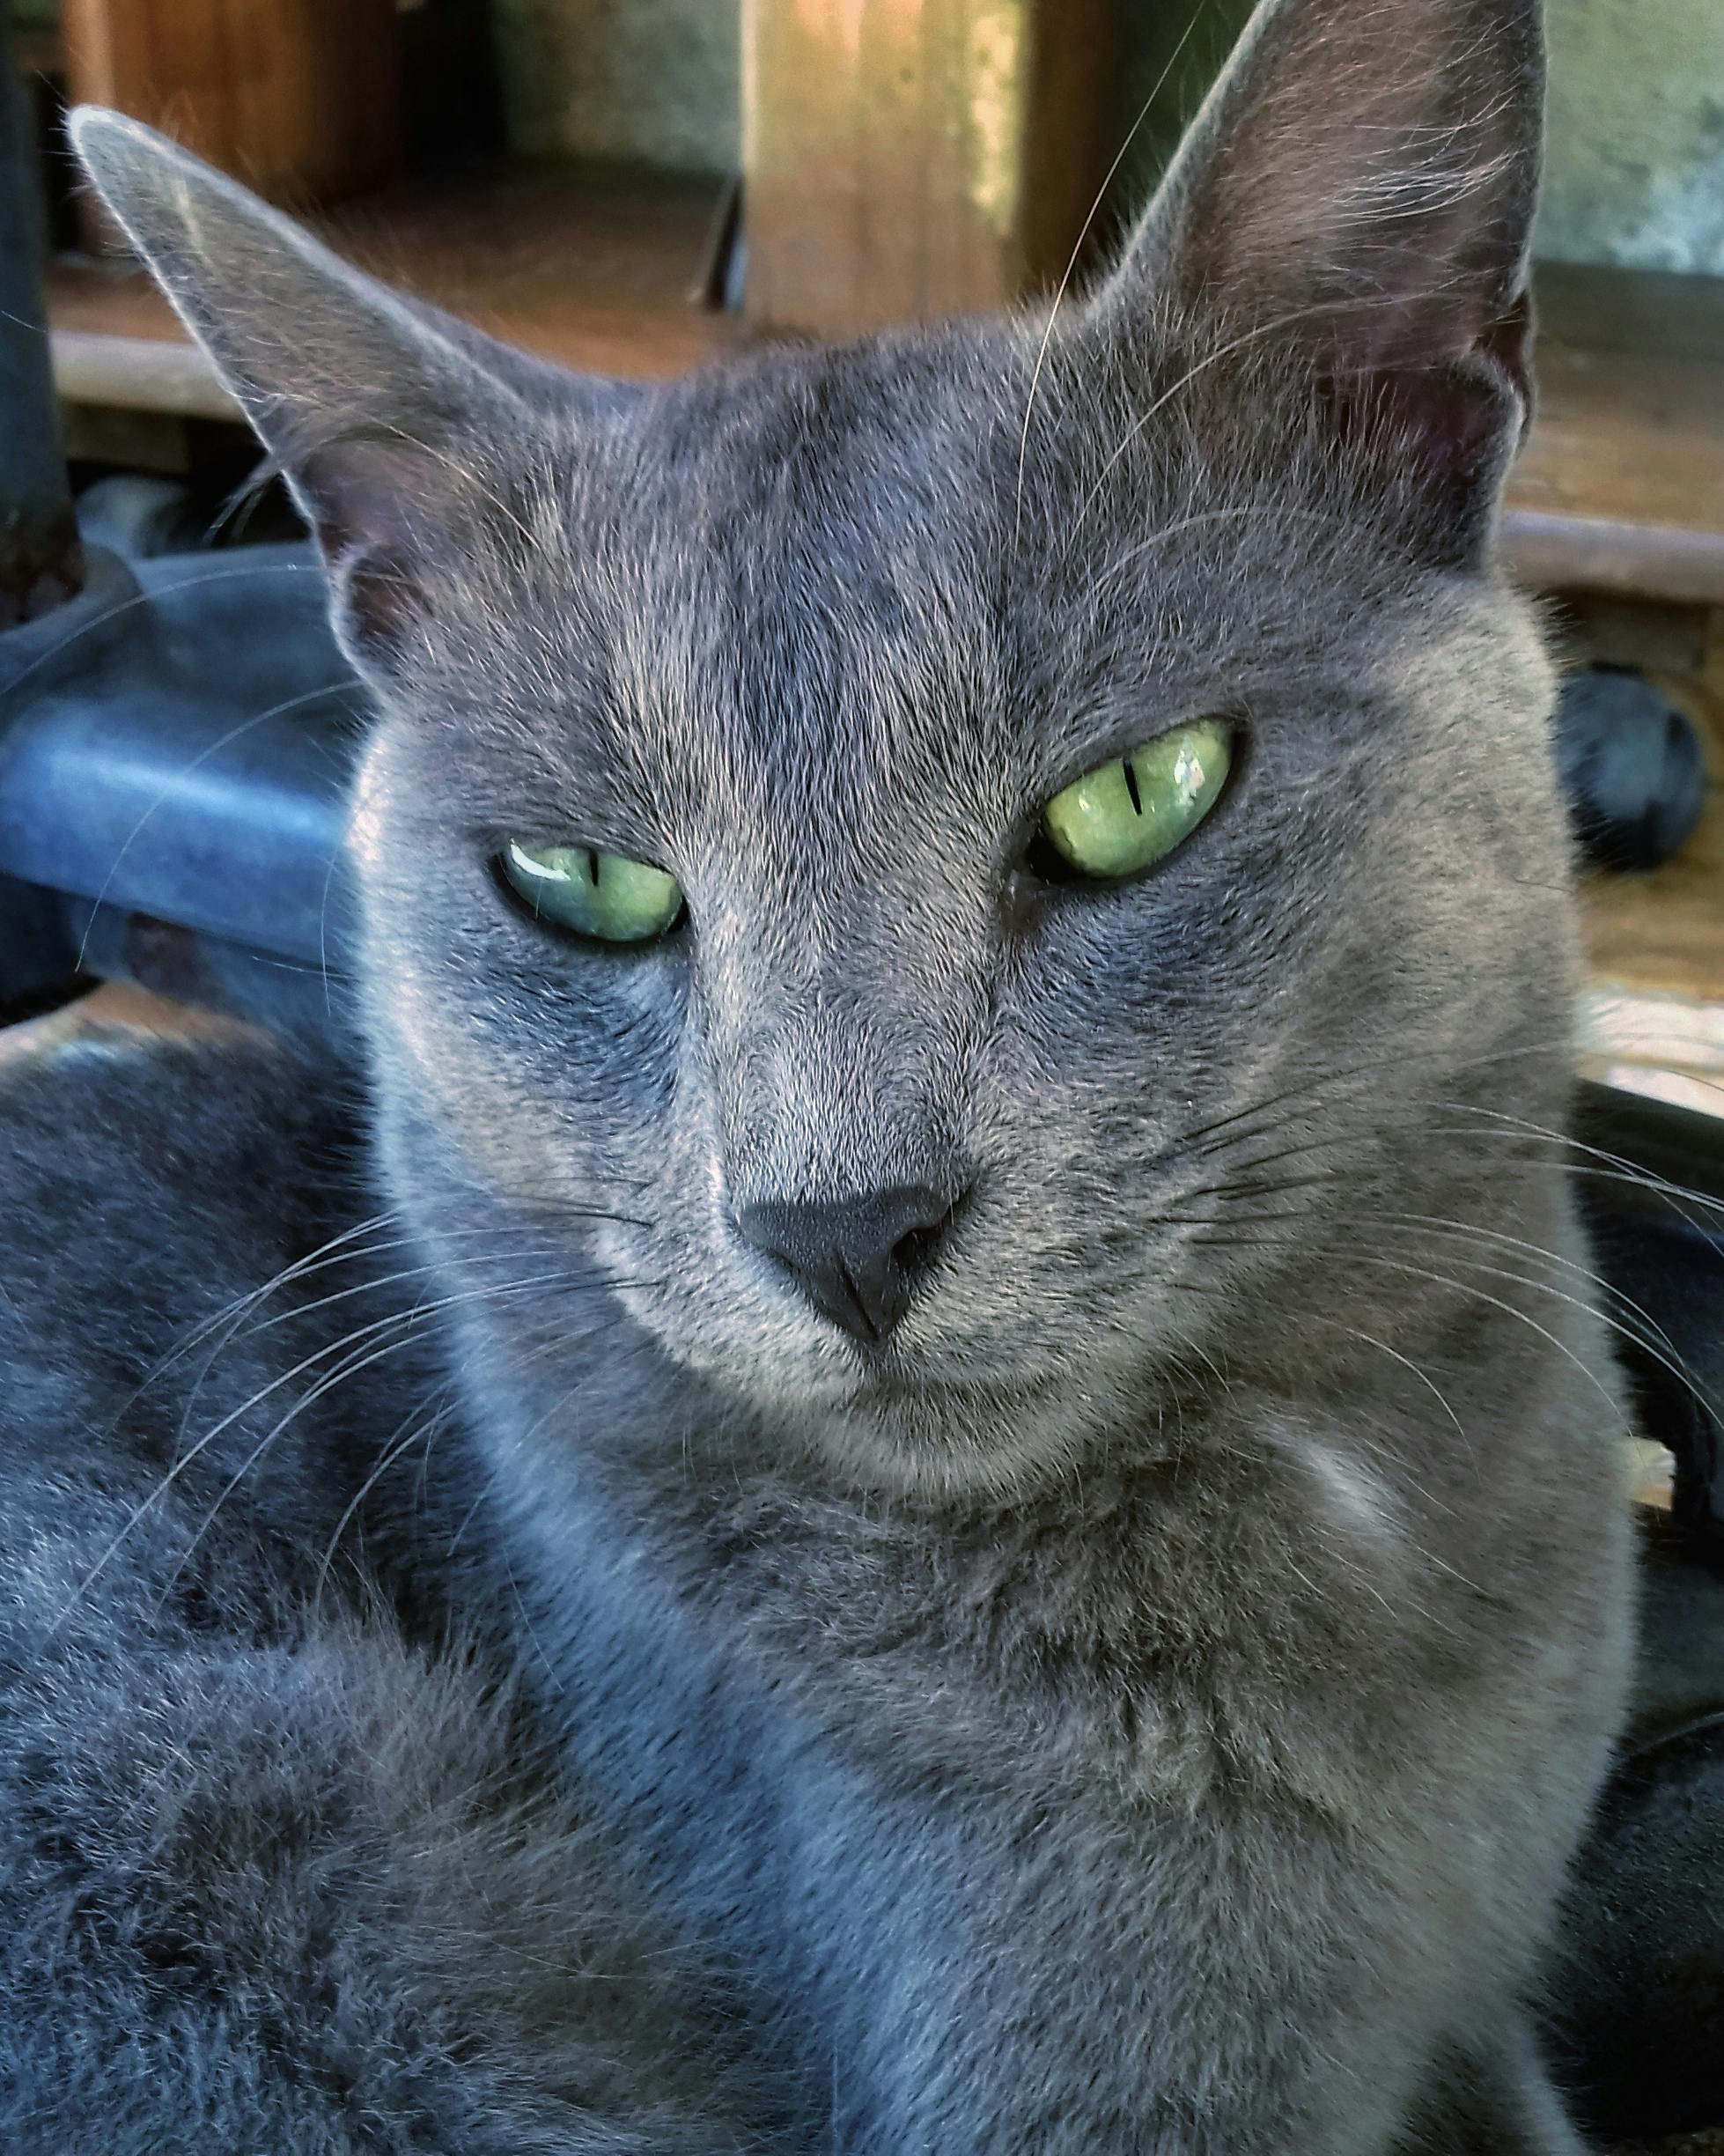 Free stock photo of #cat #animal #domestic #gray #eye #green #cute